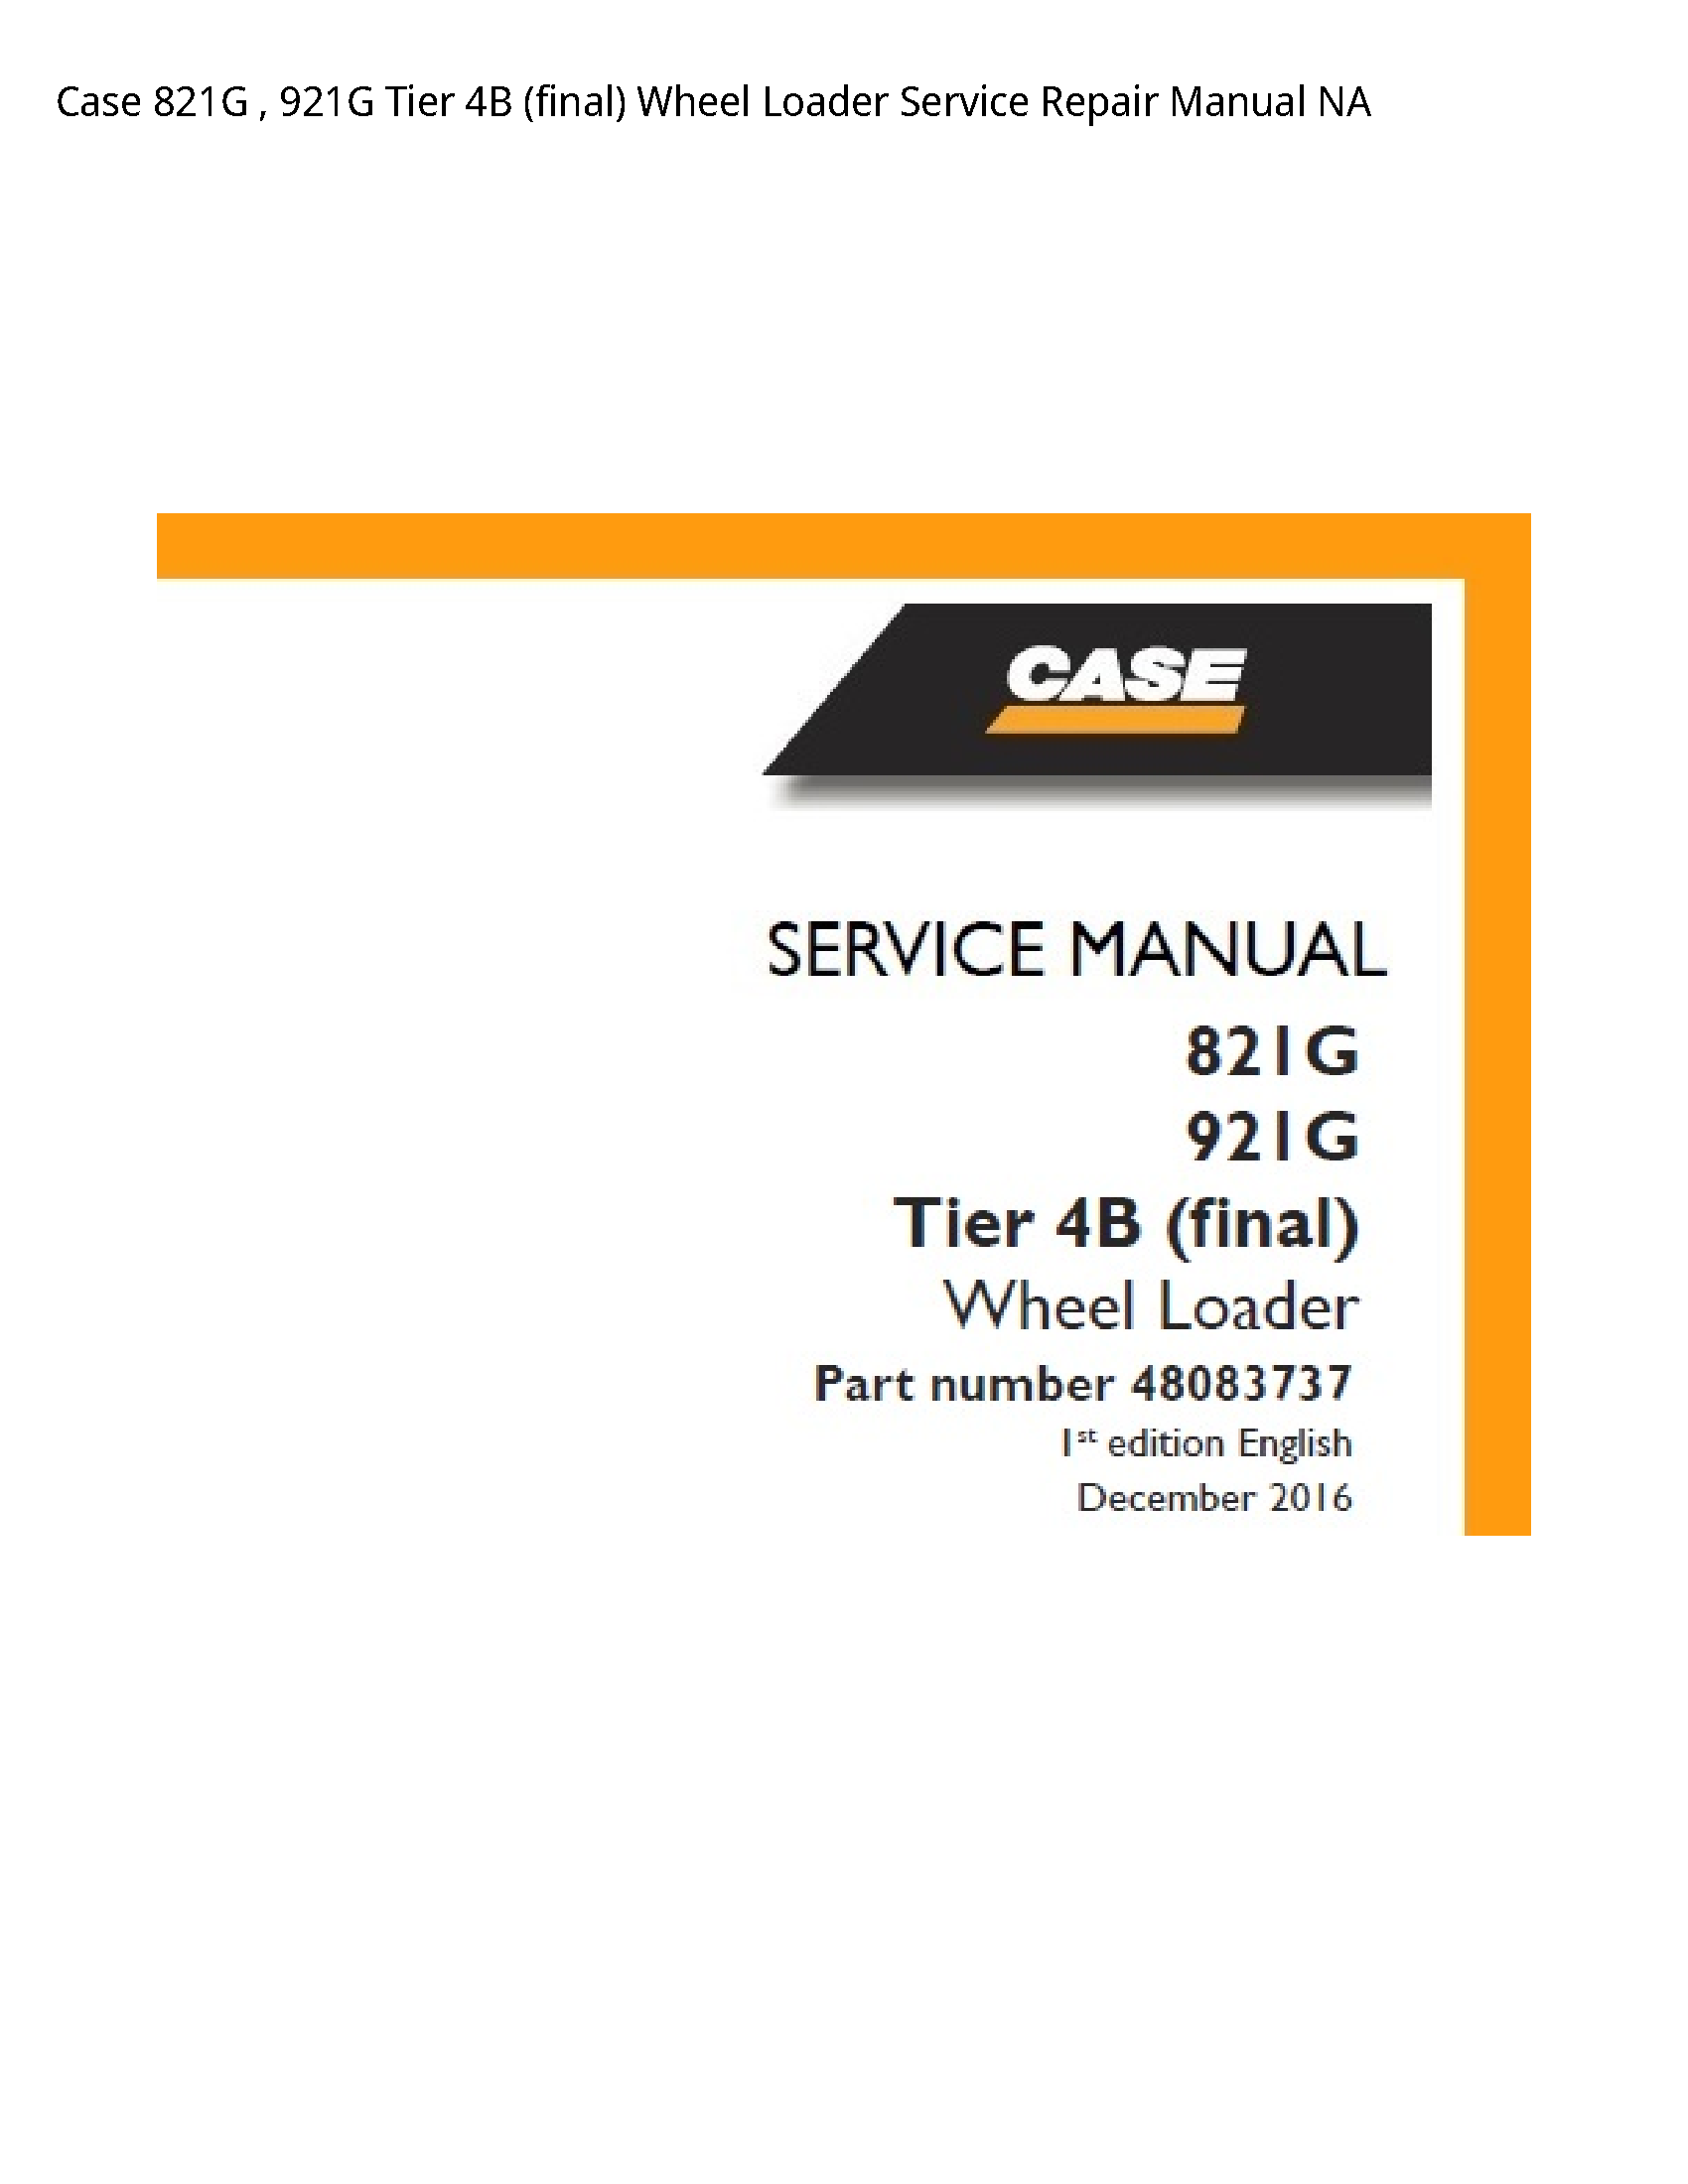 Case/Case IH 821G Tier (final) Wheel Loader manual